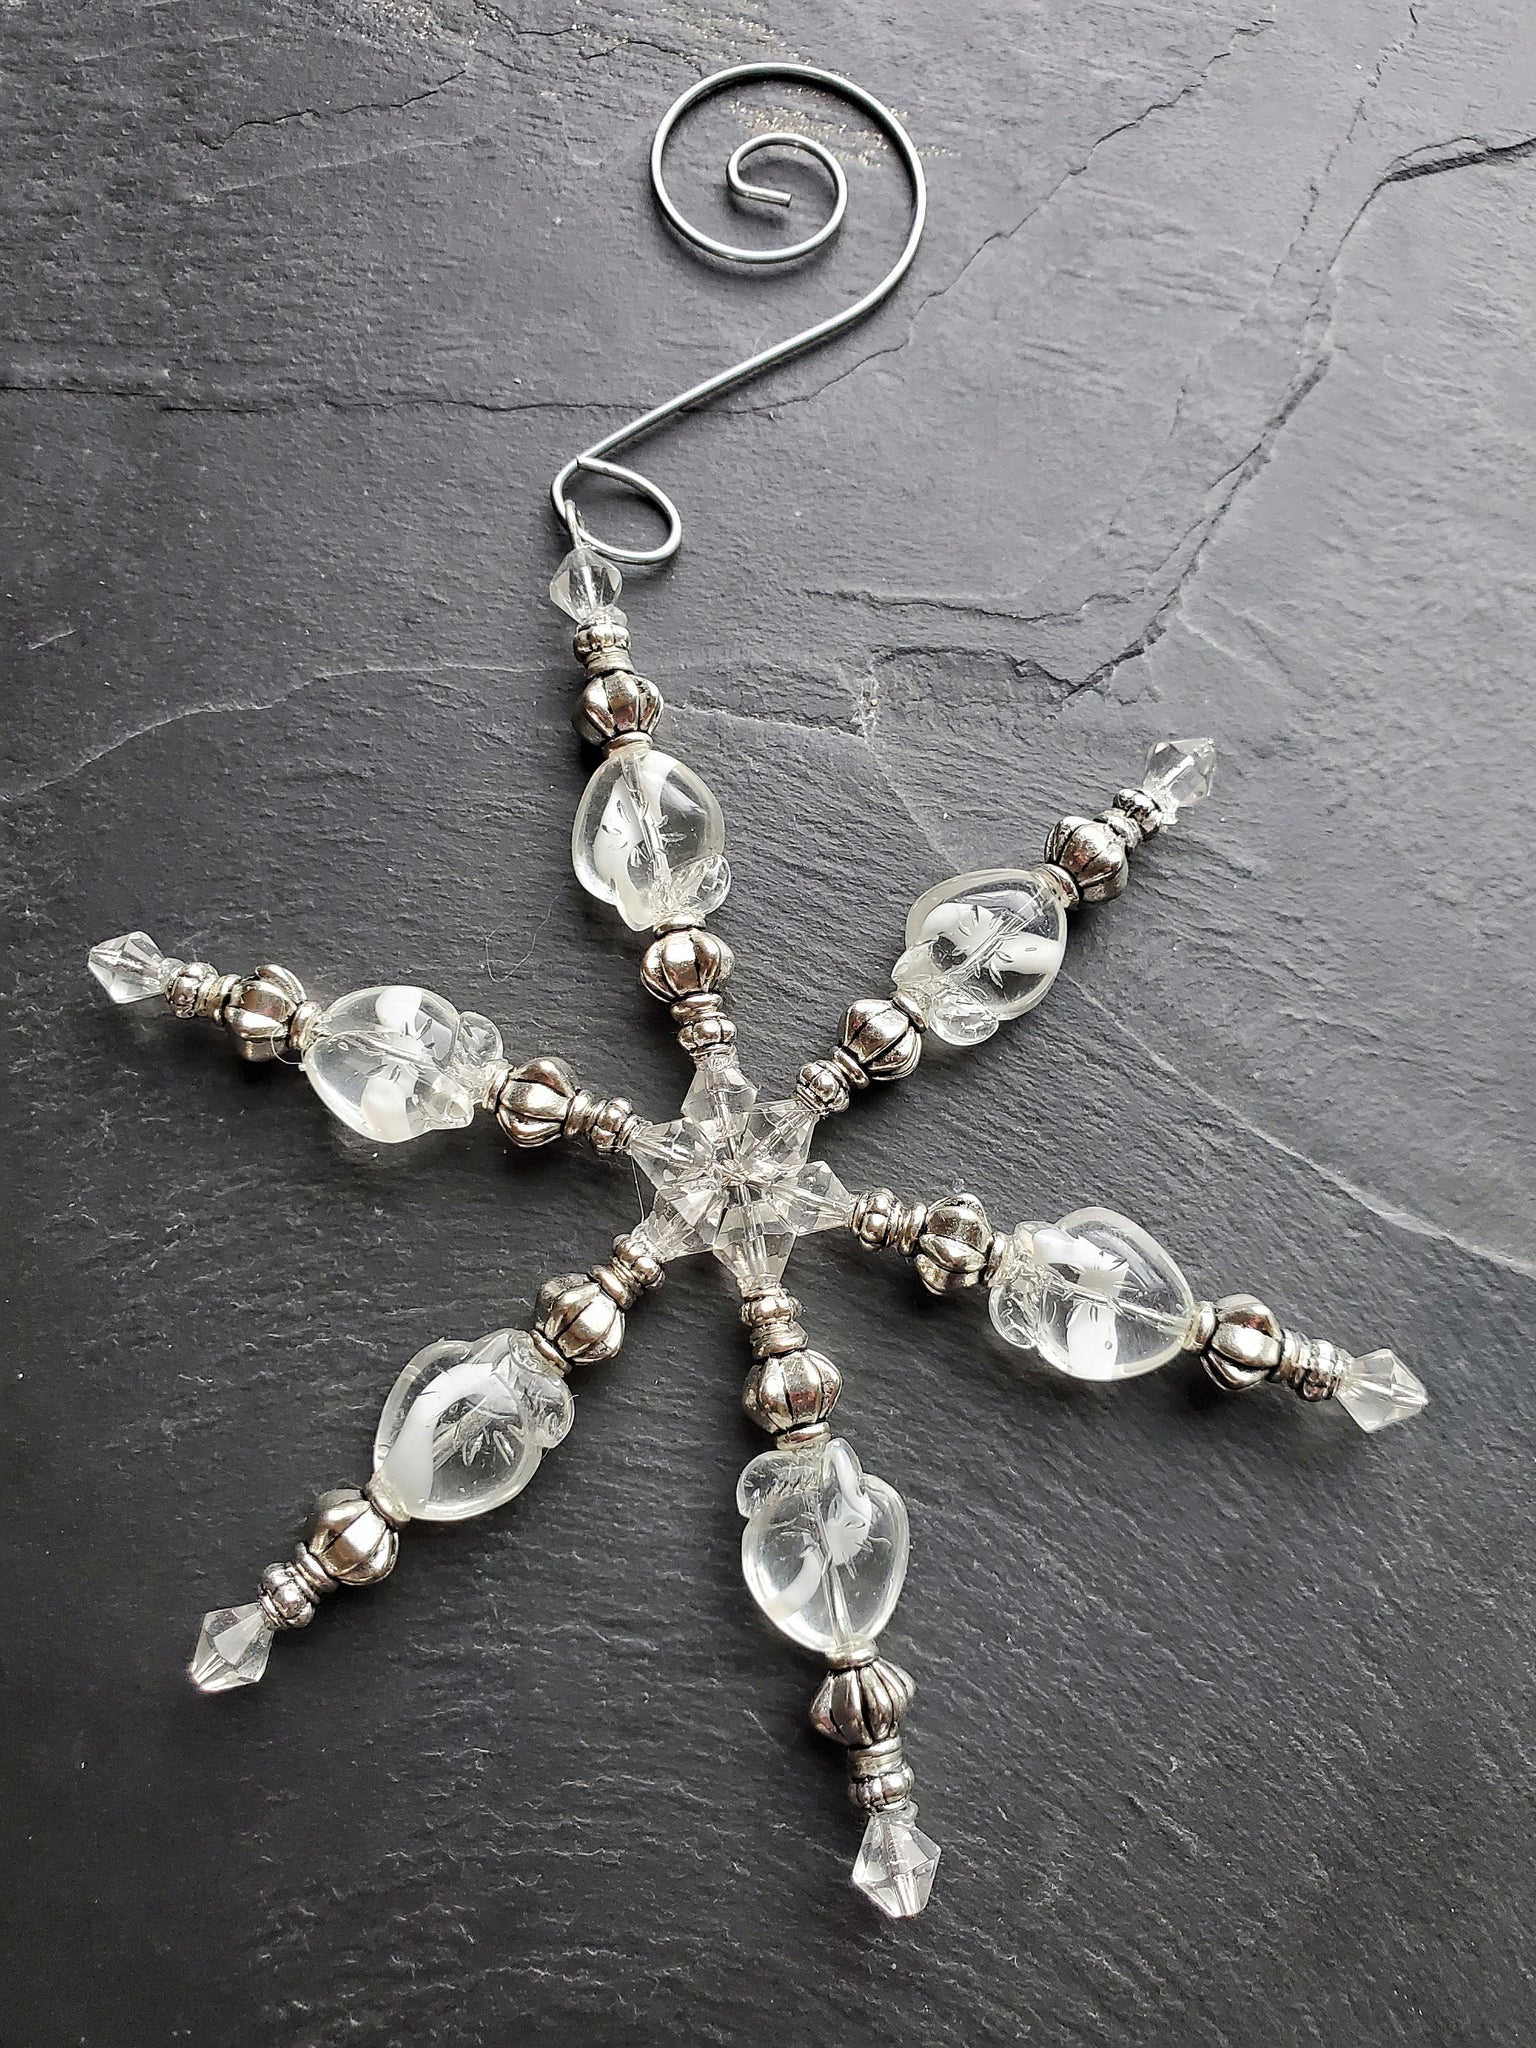 Crystal Ice Snowflake Ornament Handmade Gift